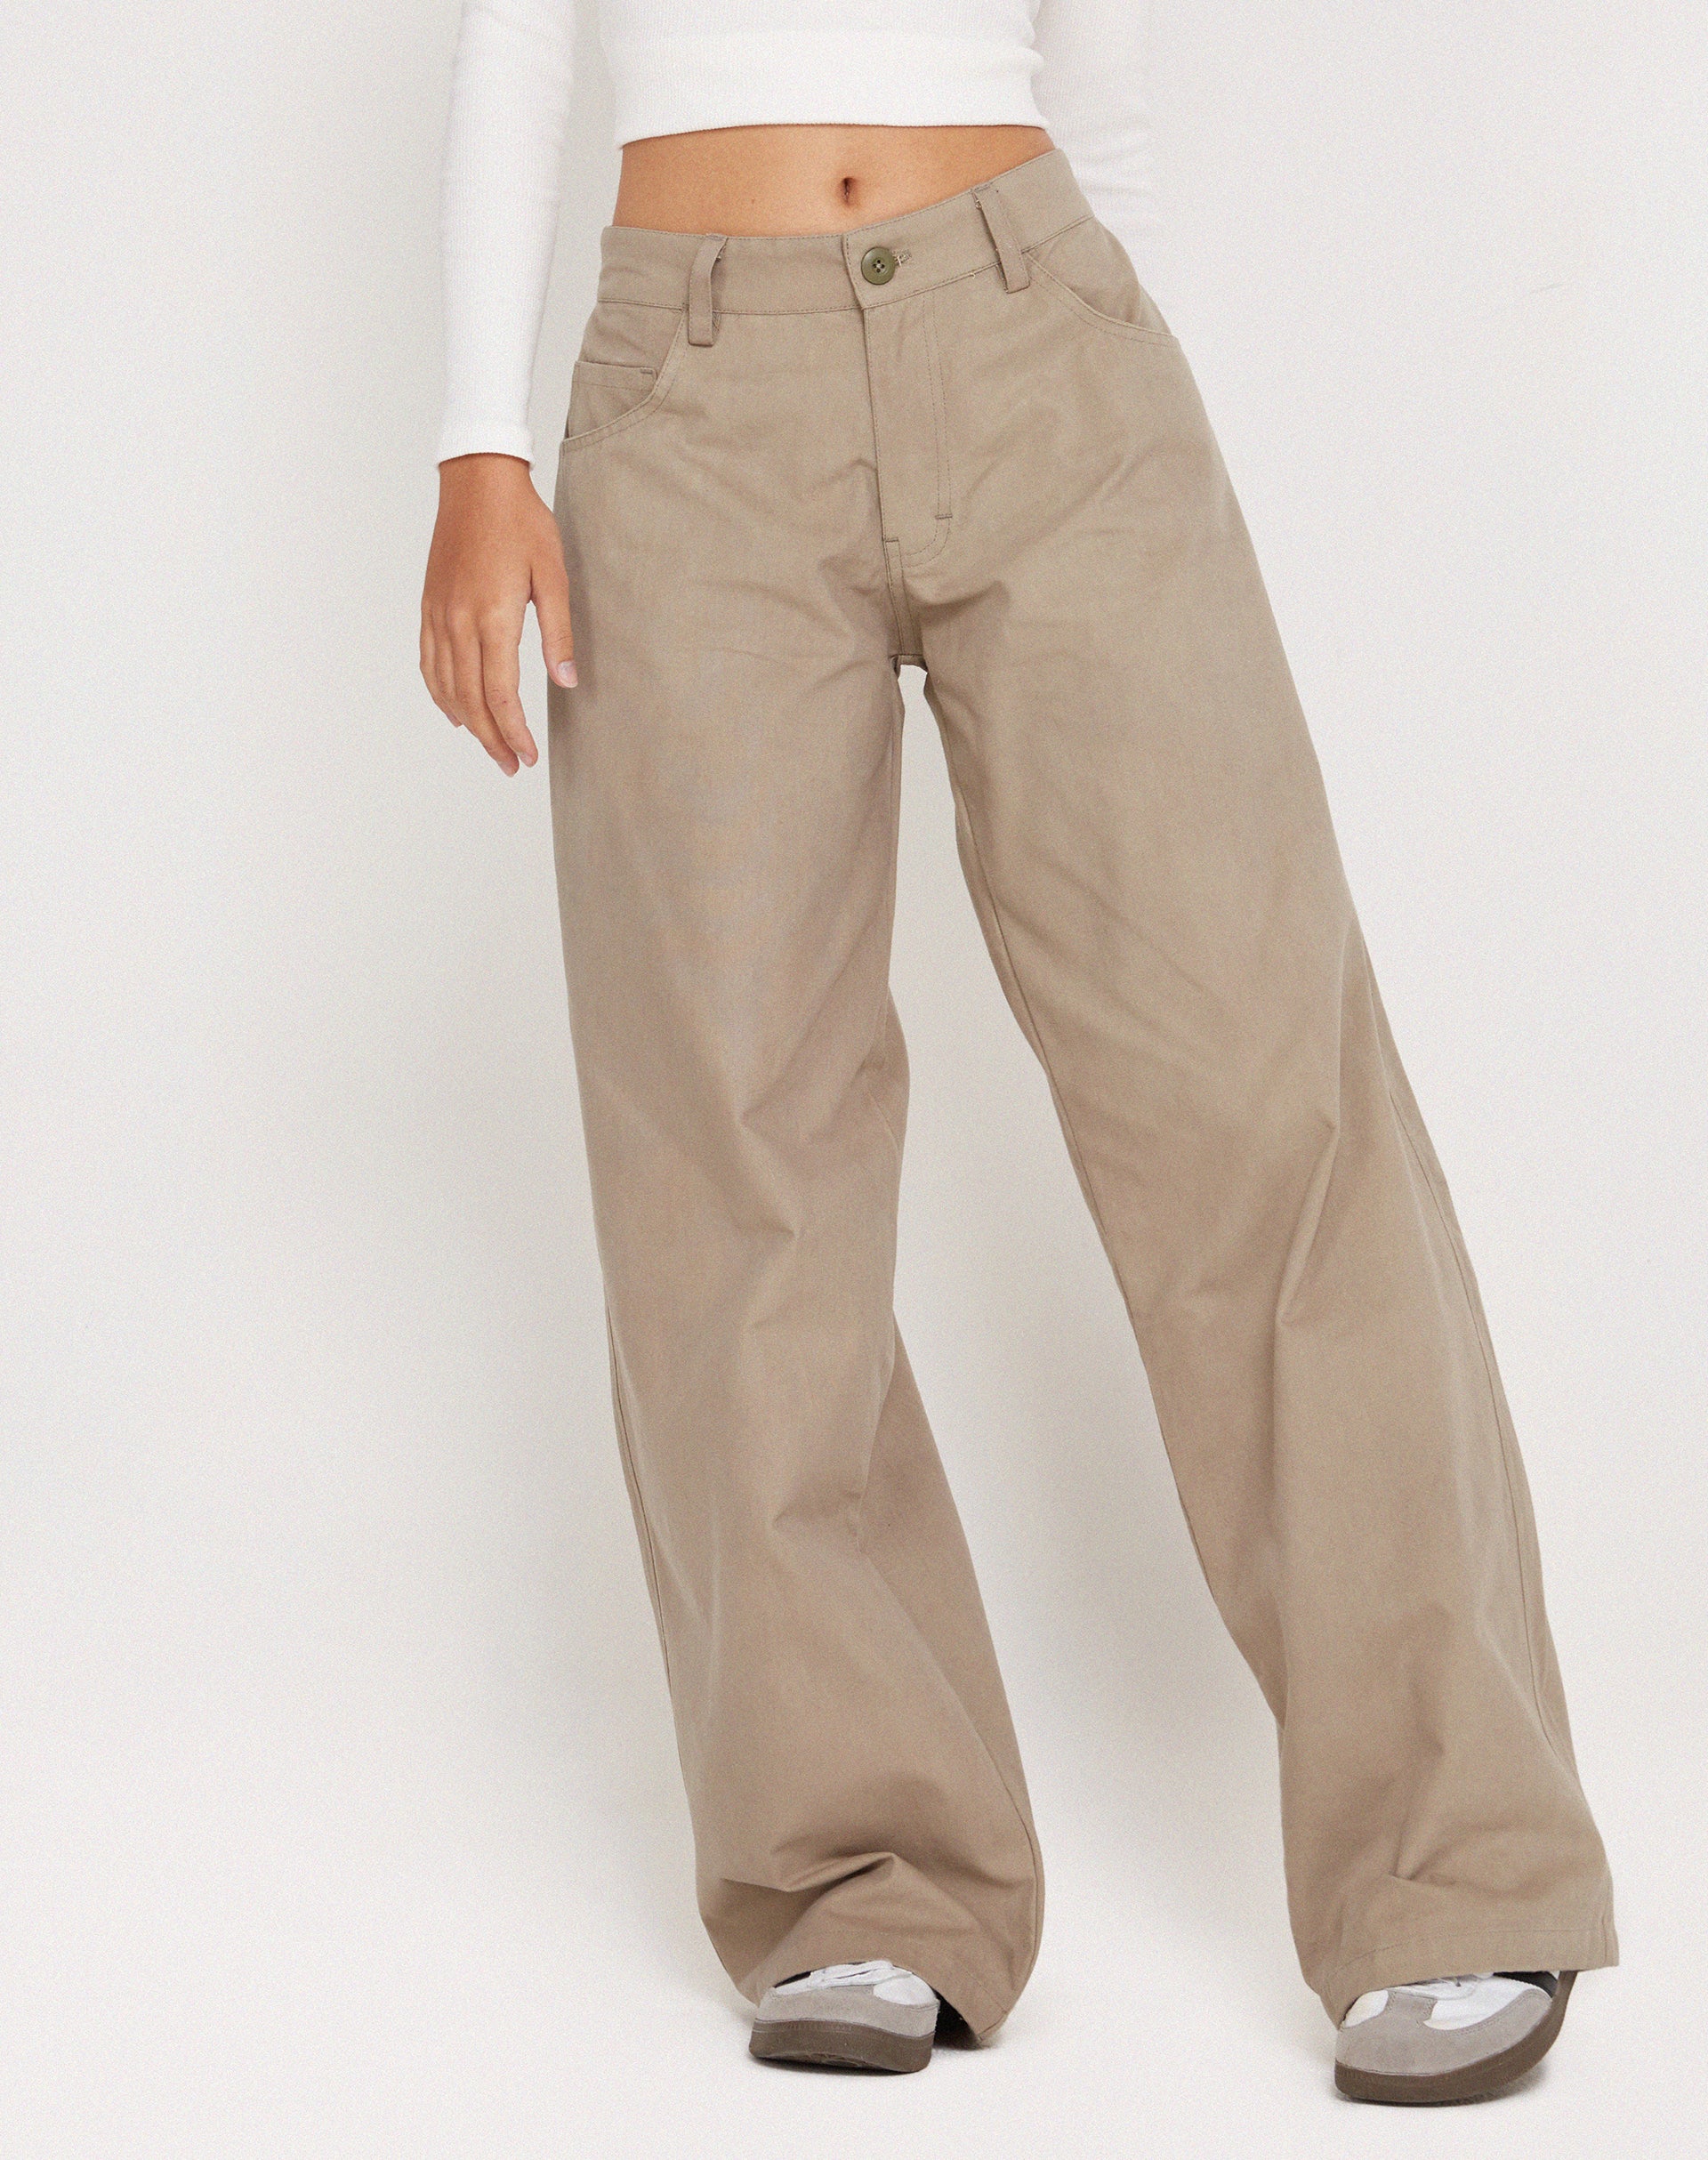 50% OFF on SASSAFRAS Women Olive Green Regular Fit Solid Trousers on Myntra  | PaisaWapas.com